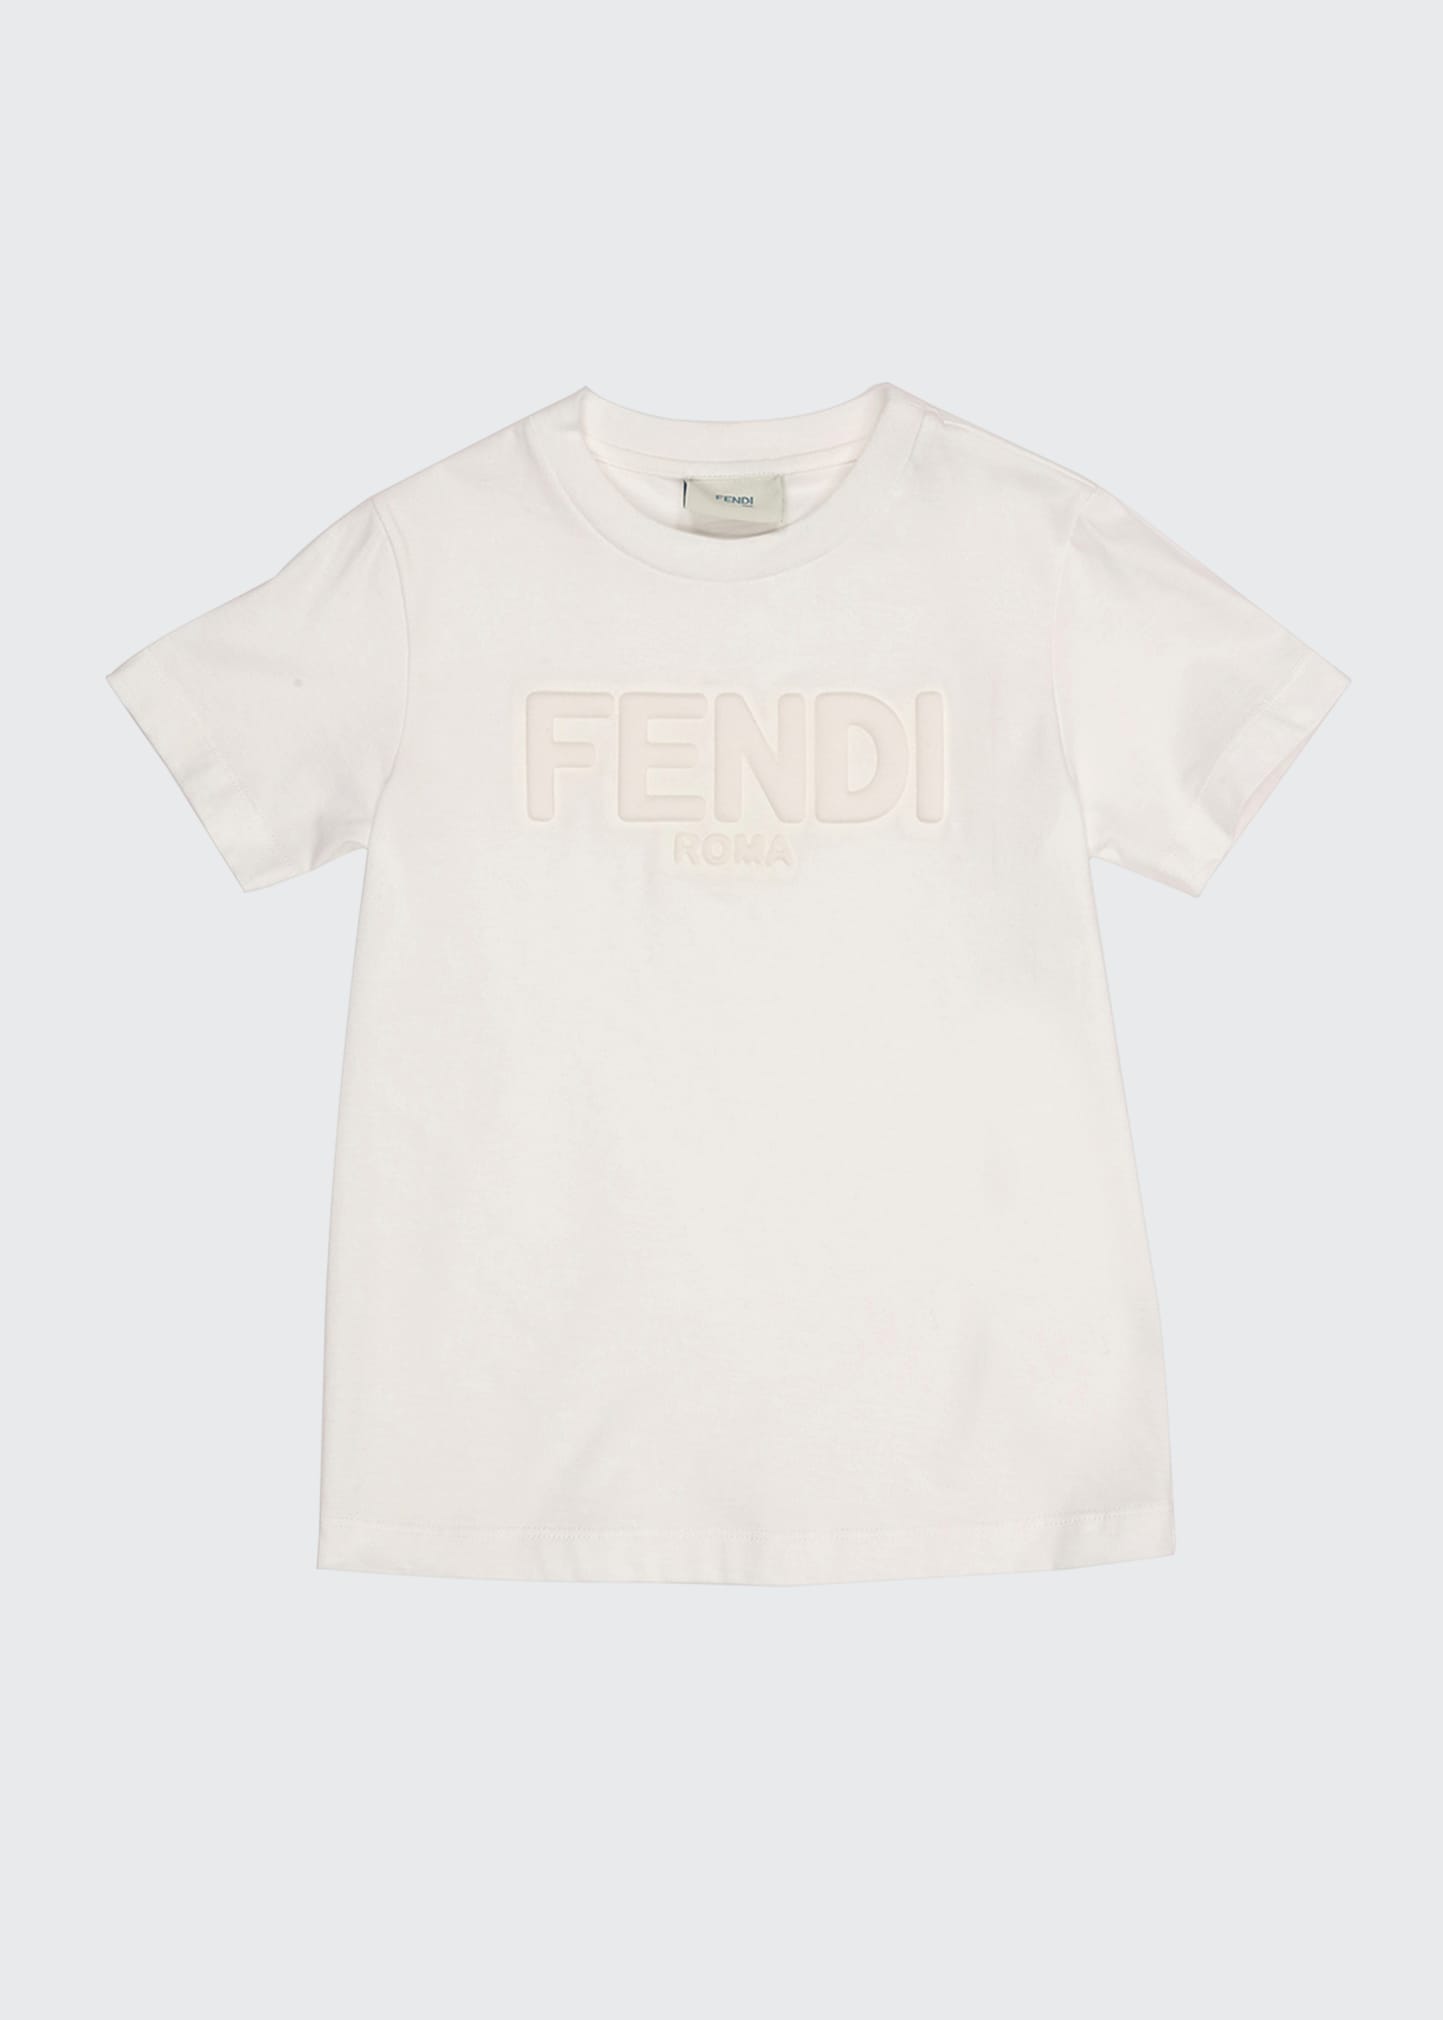 Women's FENDI T-Shirts On Sale, Up To 70% Off | ModeSens